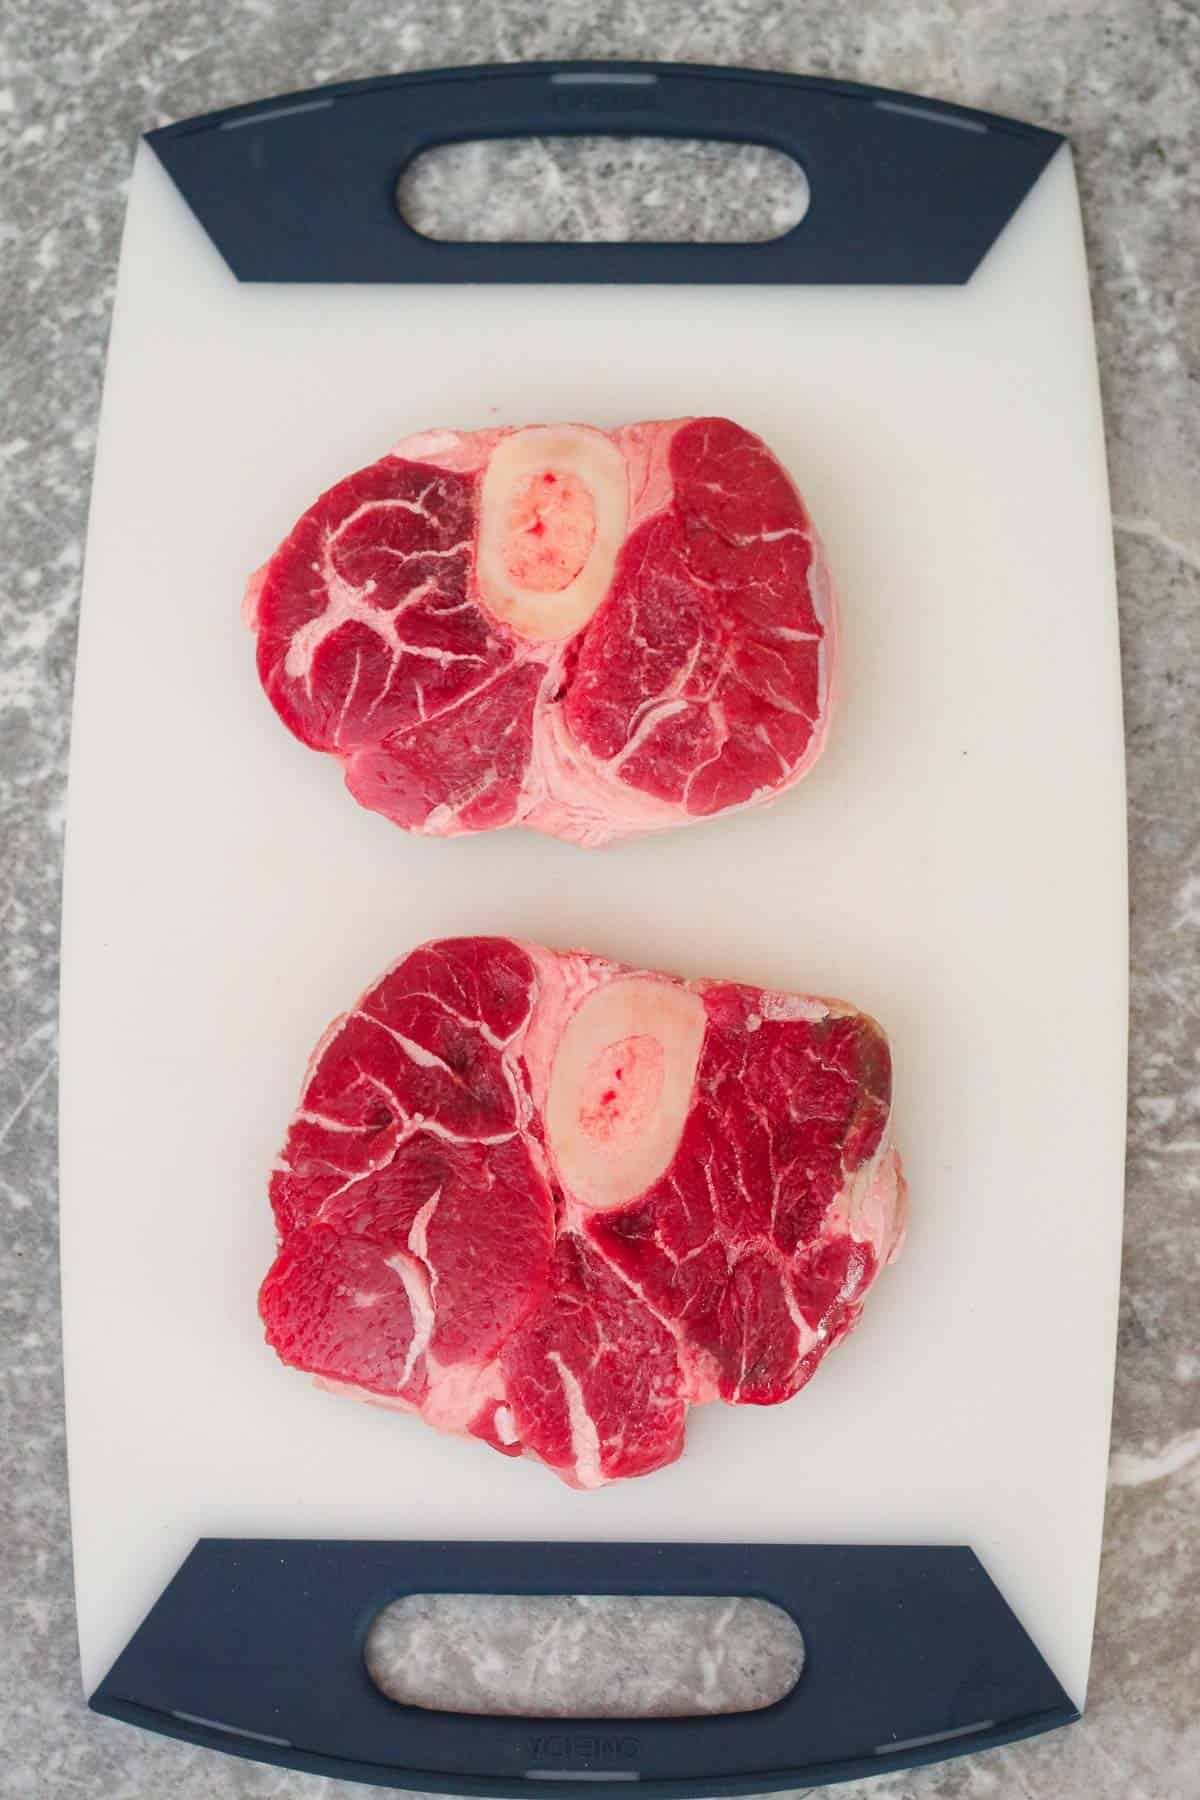 Raw beef shanks (2) in a cutting board.